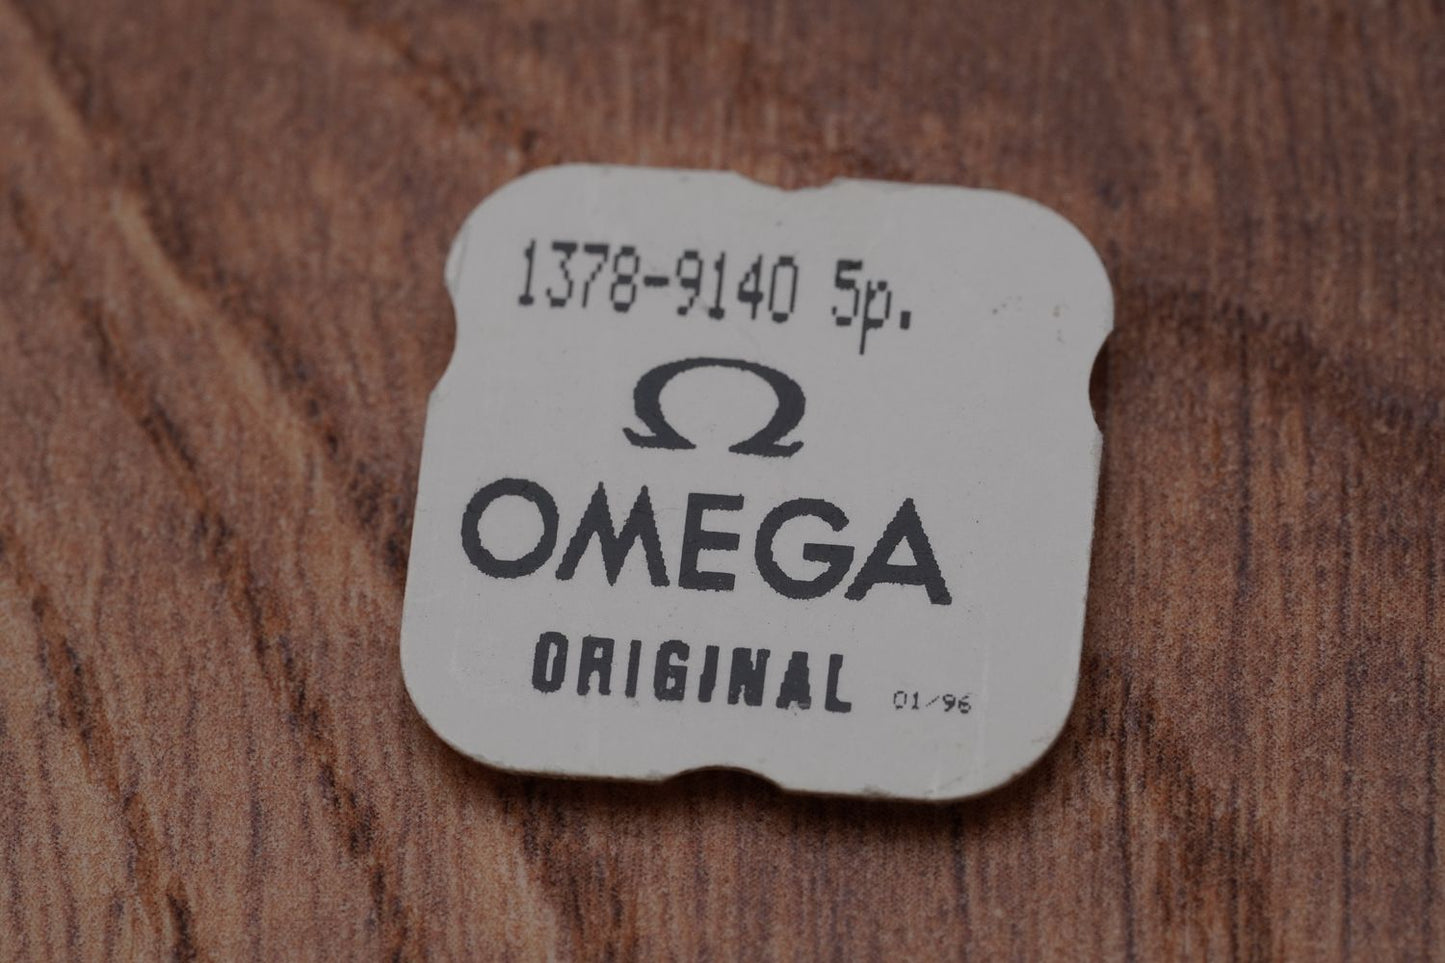 Omega cal 1378 part 9140 stem extension